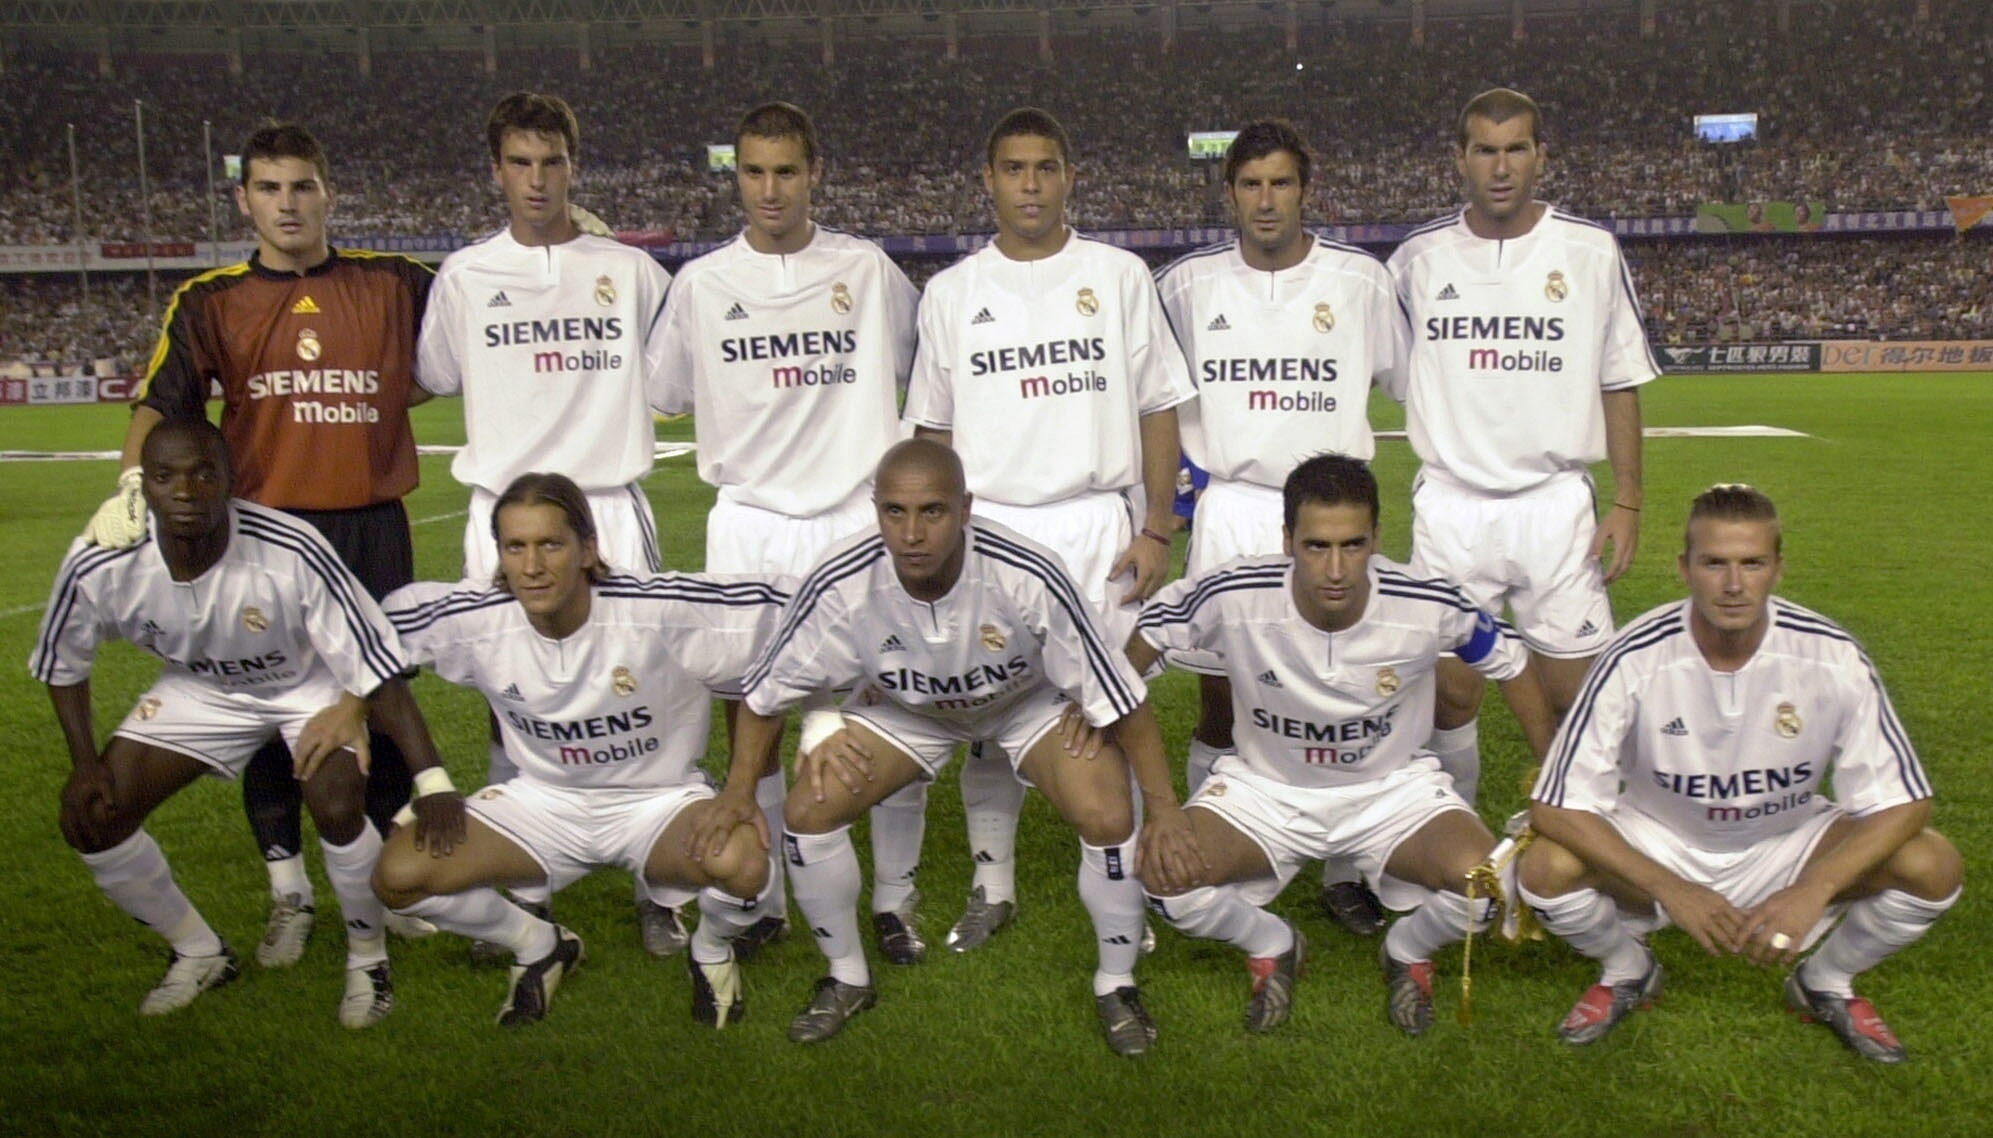 Le onze type du Real Madrid des Galactiques. EFE